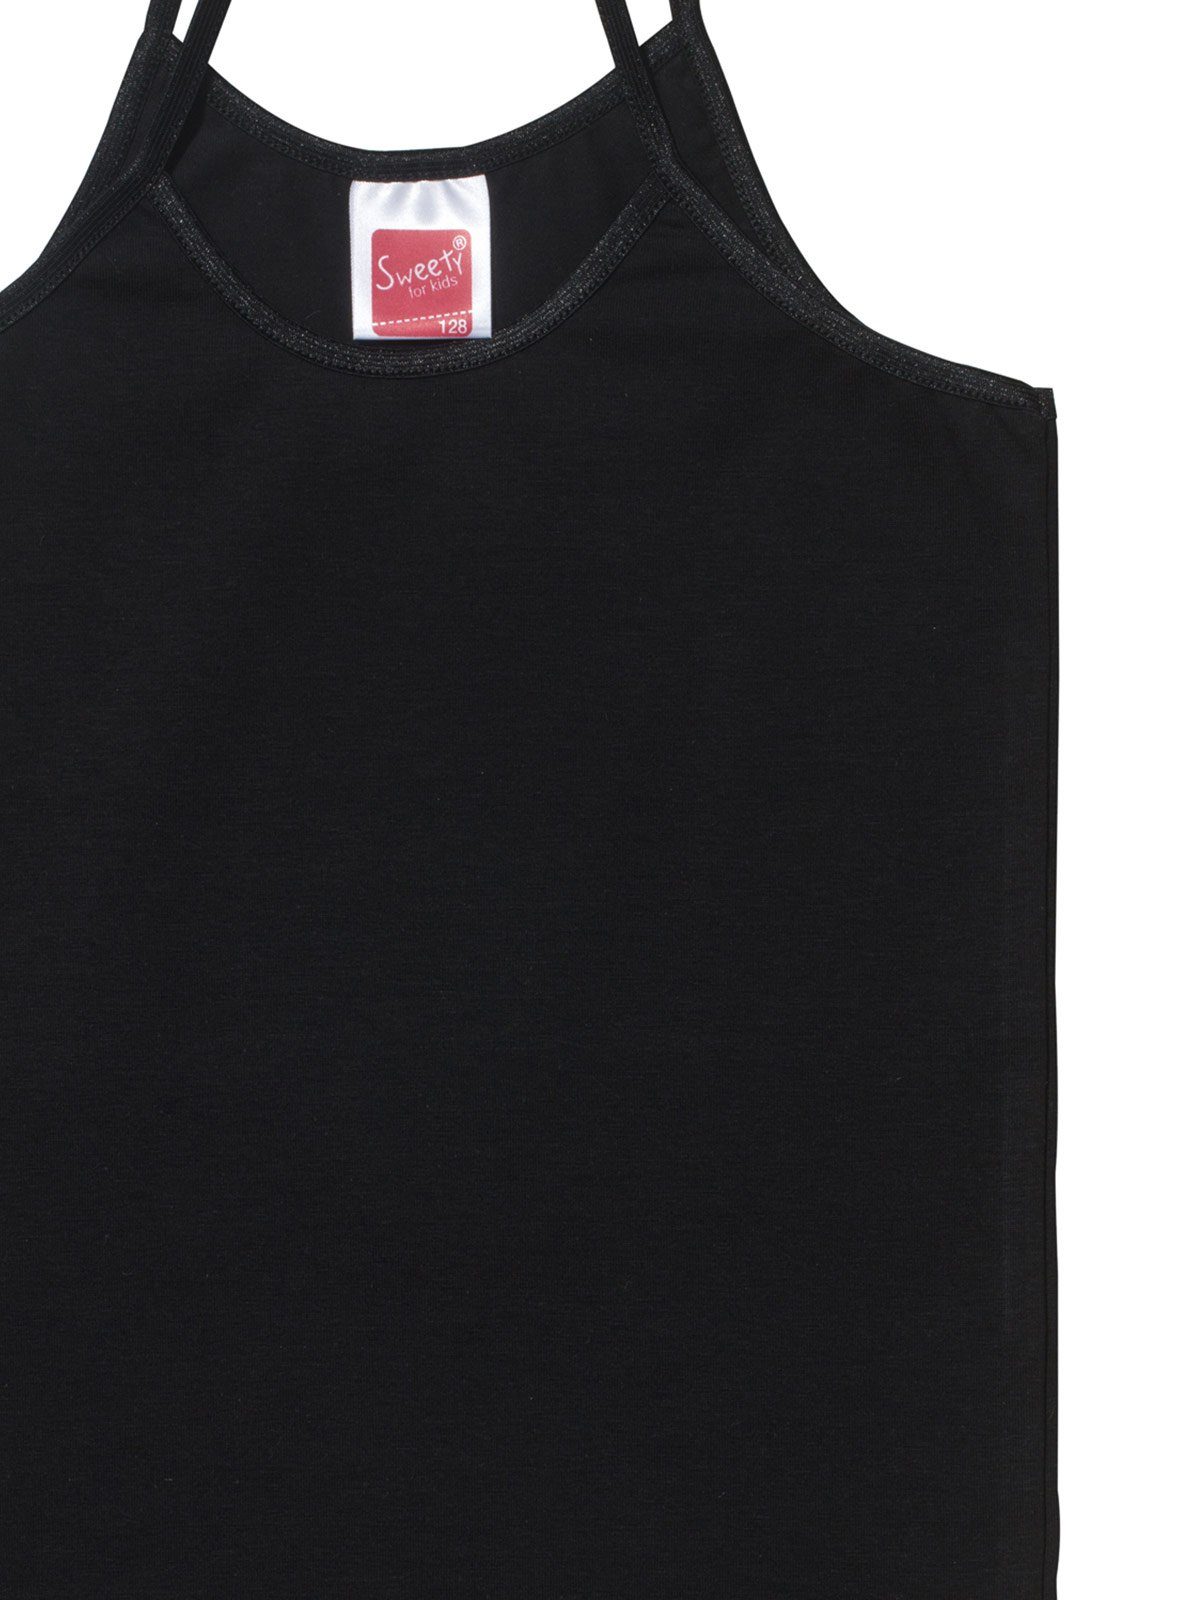 Sweety for Kids Unterhemd Mädchen Trägerhemd hohe 1-St) Markenqualität Single Jersey (Stück